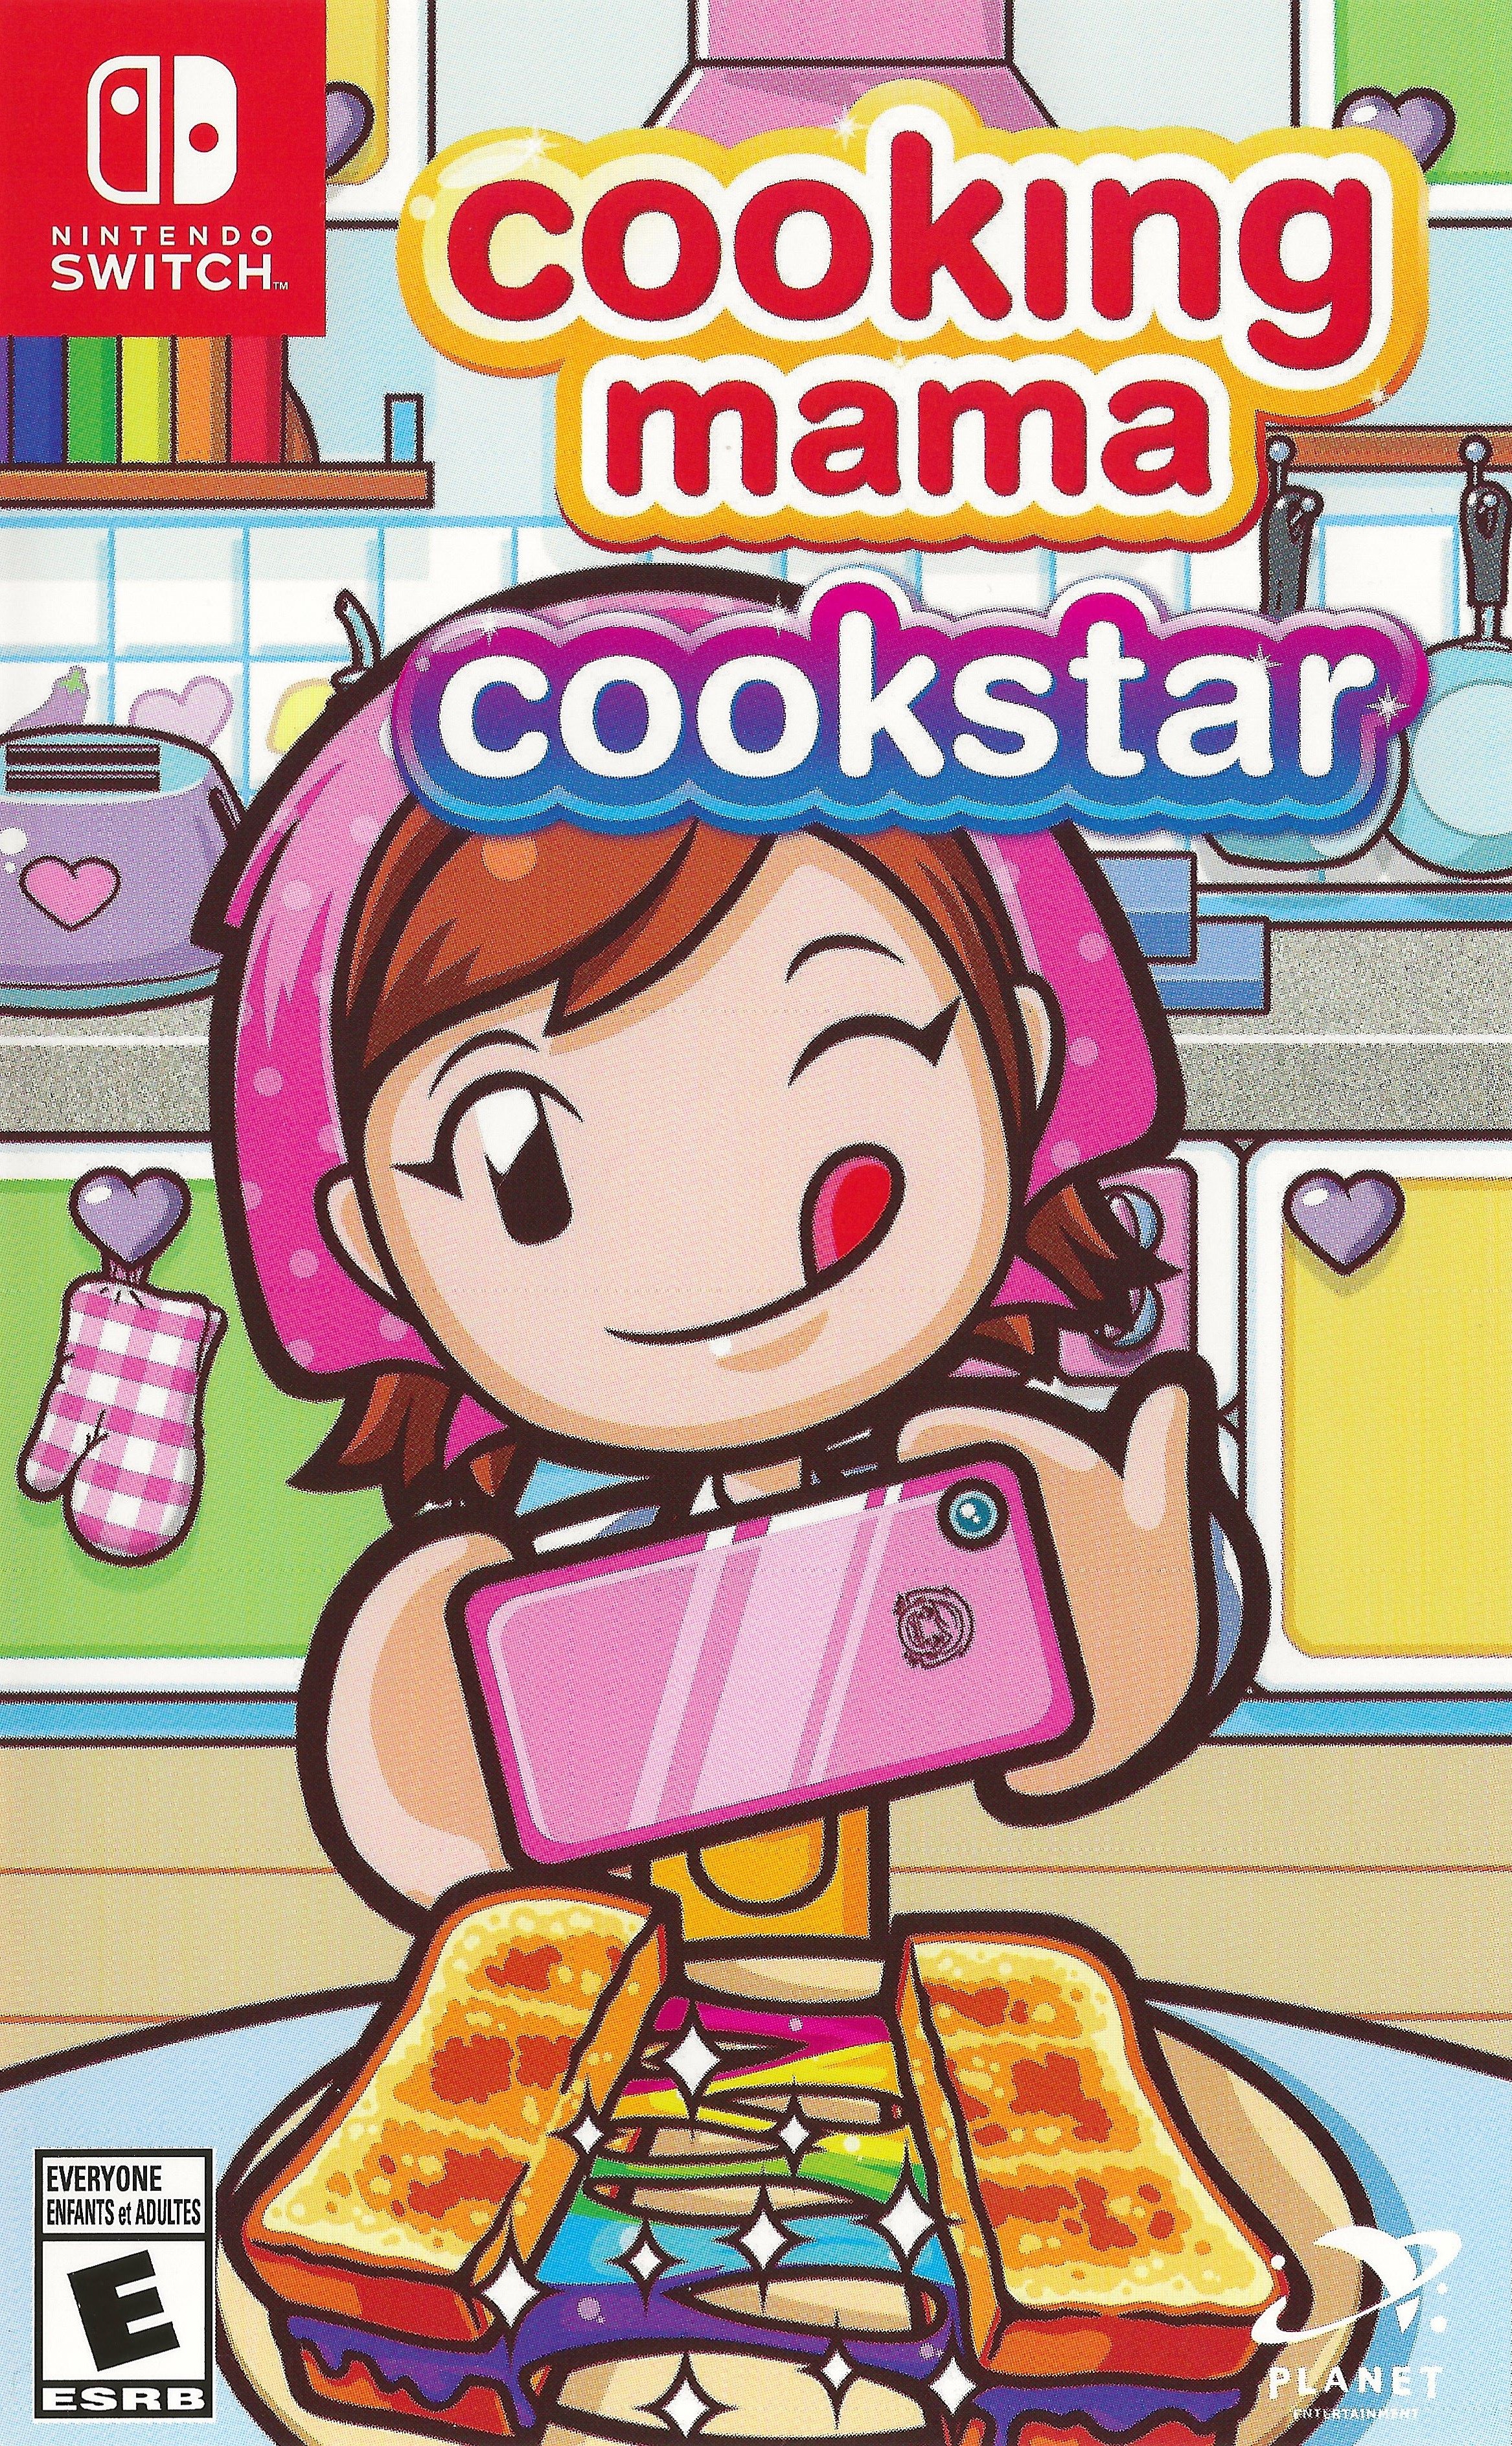 'Cooking Mama: CookStar'